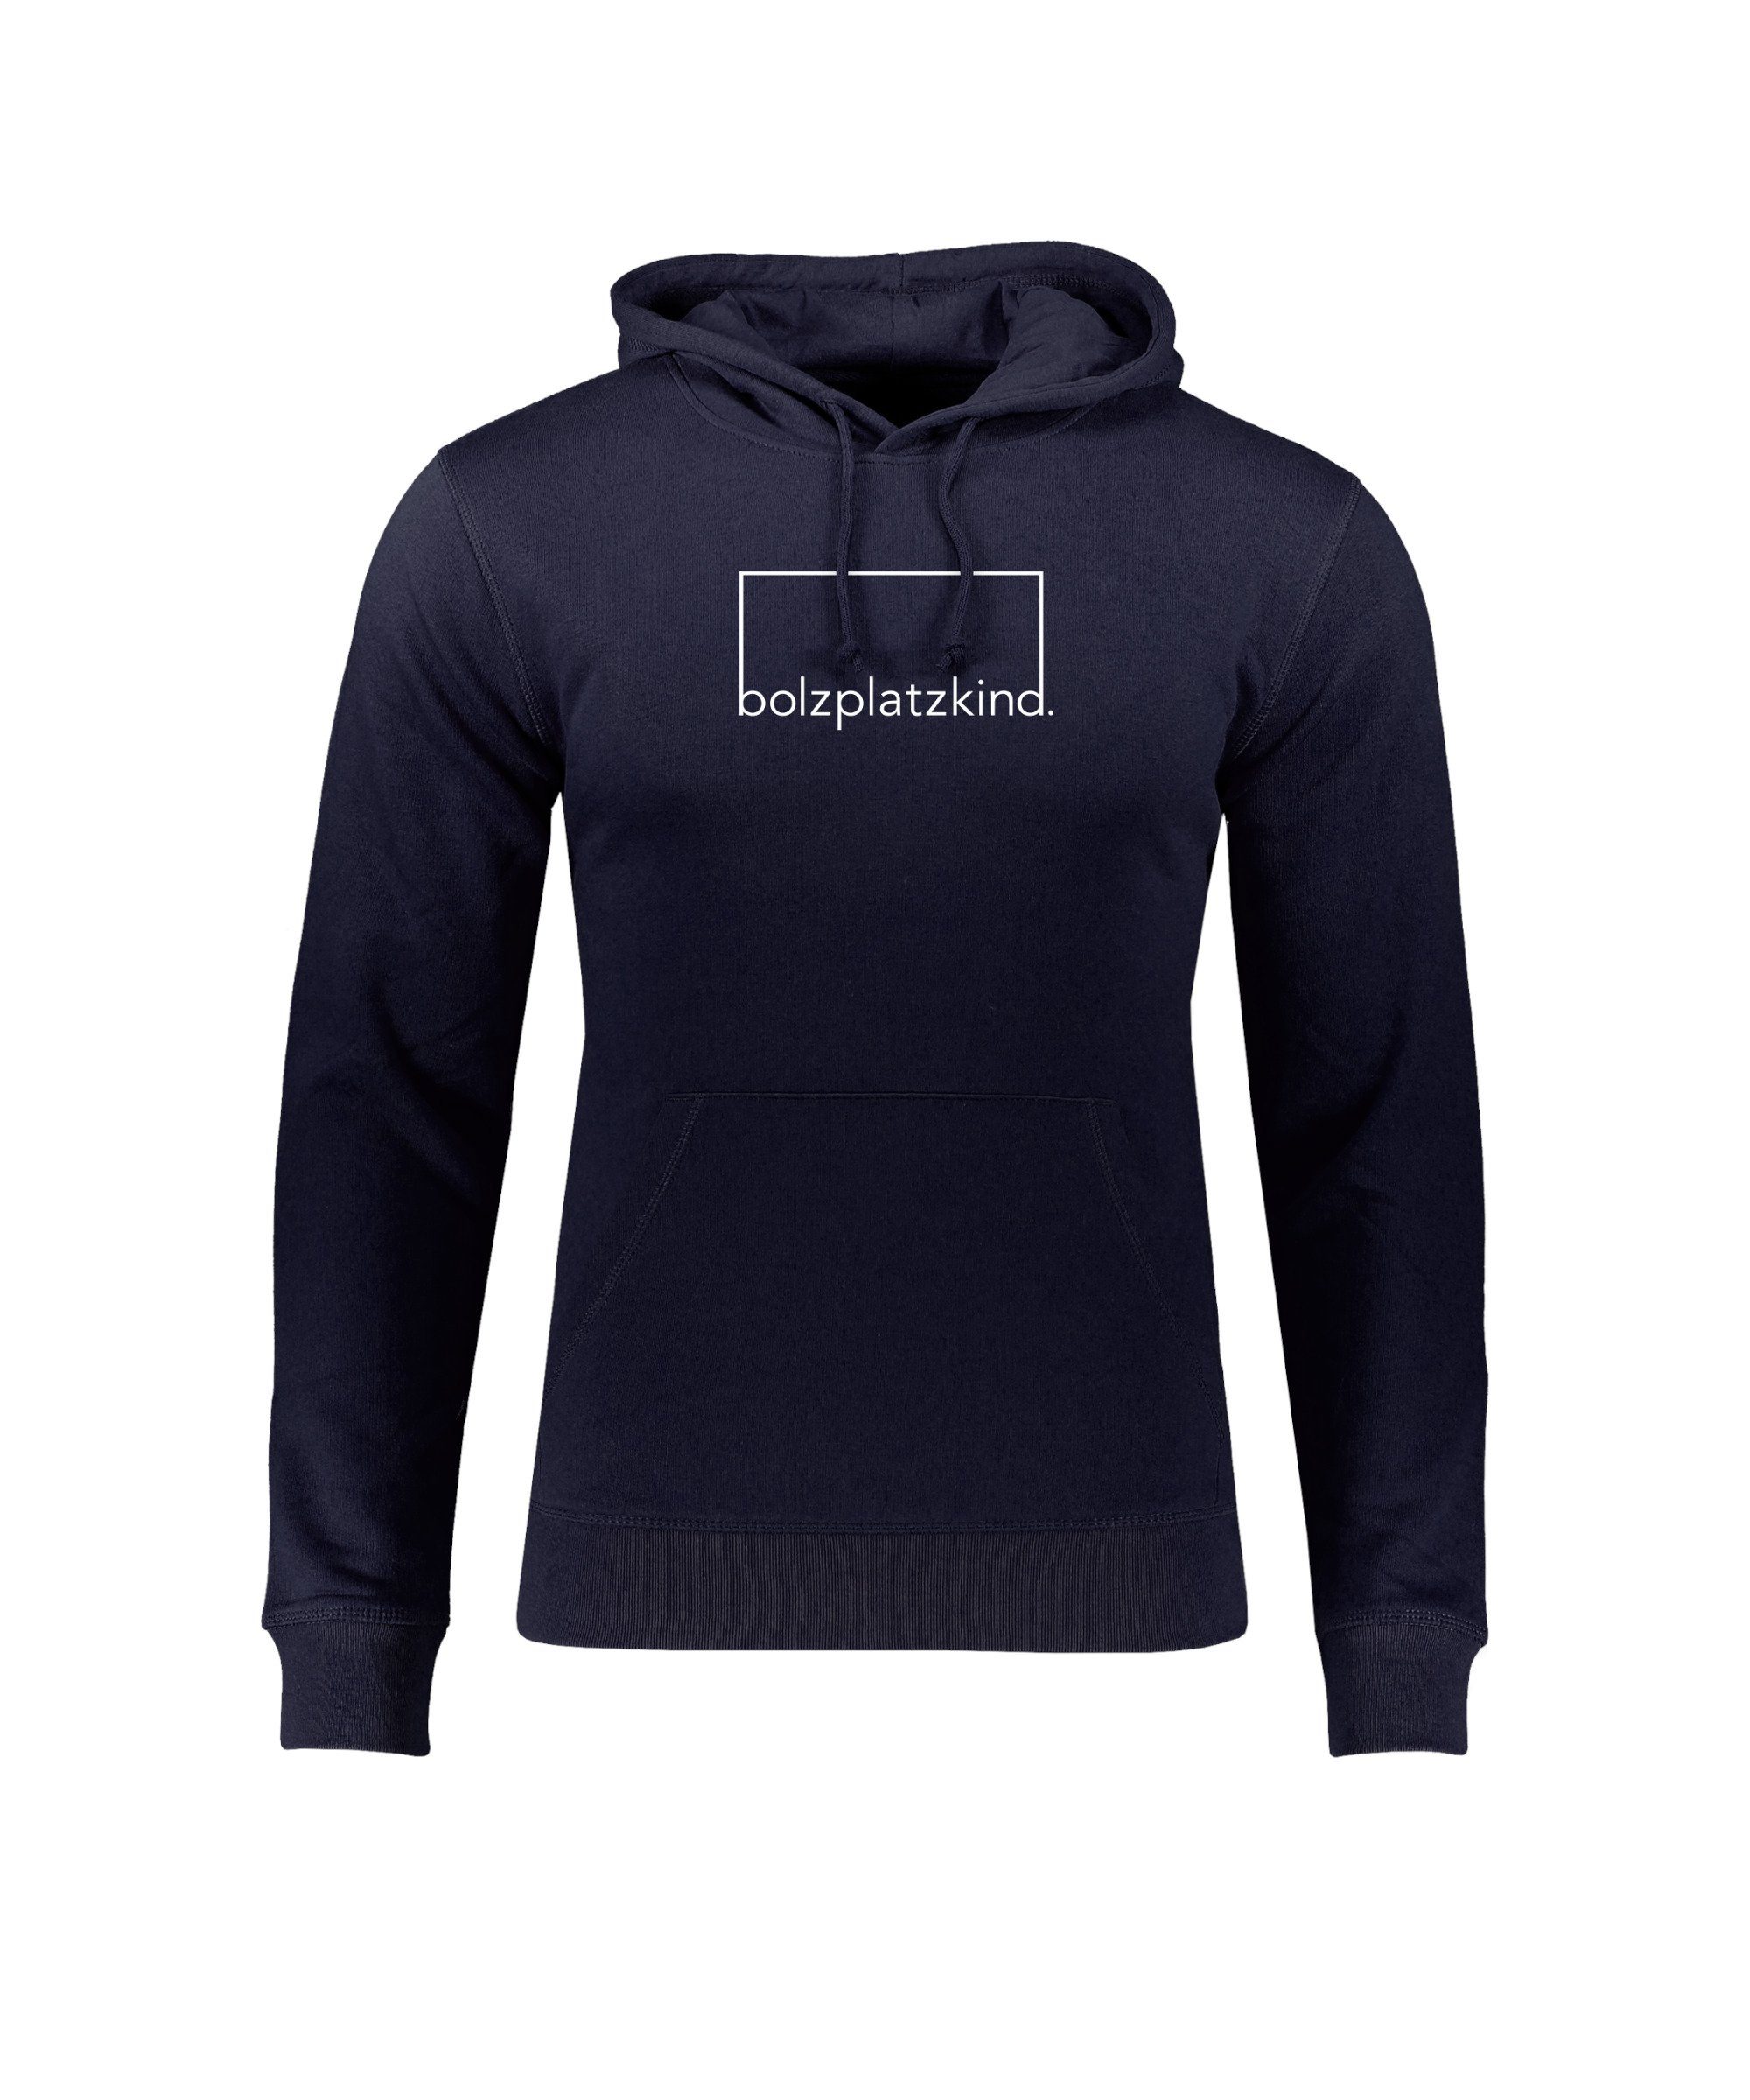 Bolzplatzkind Sweatshirt "Selbstliebe" Hoody blauweiss